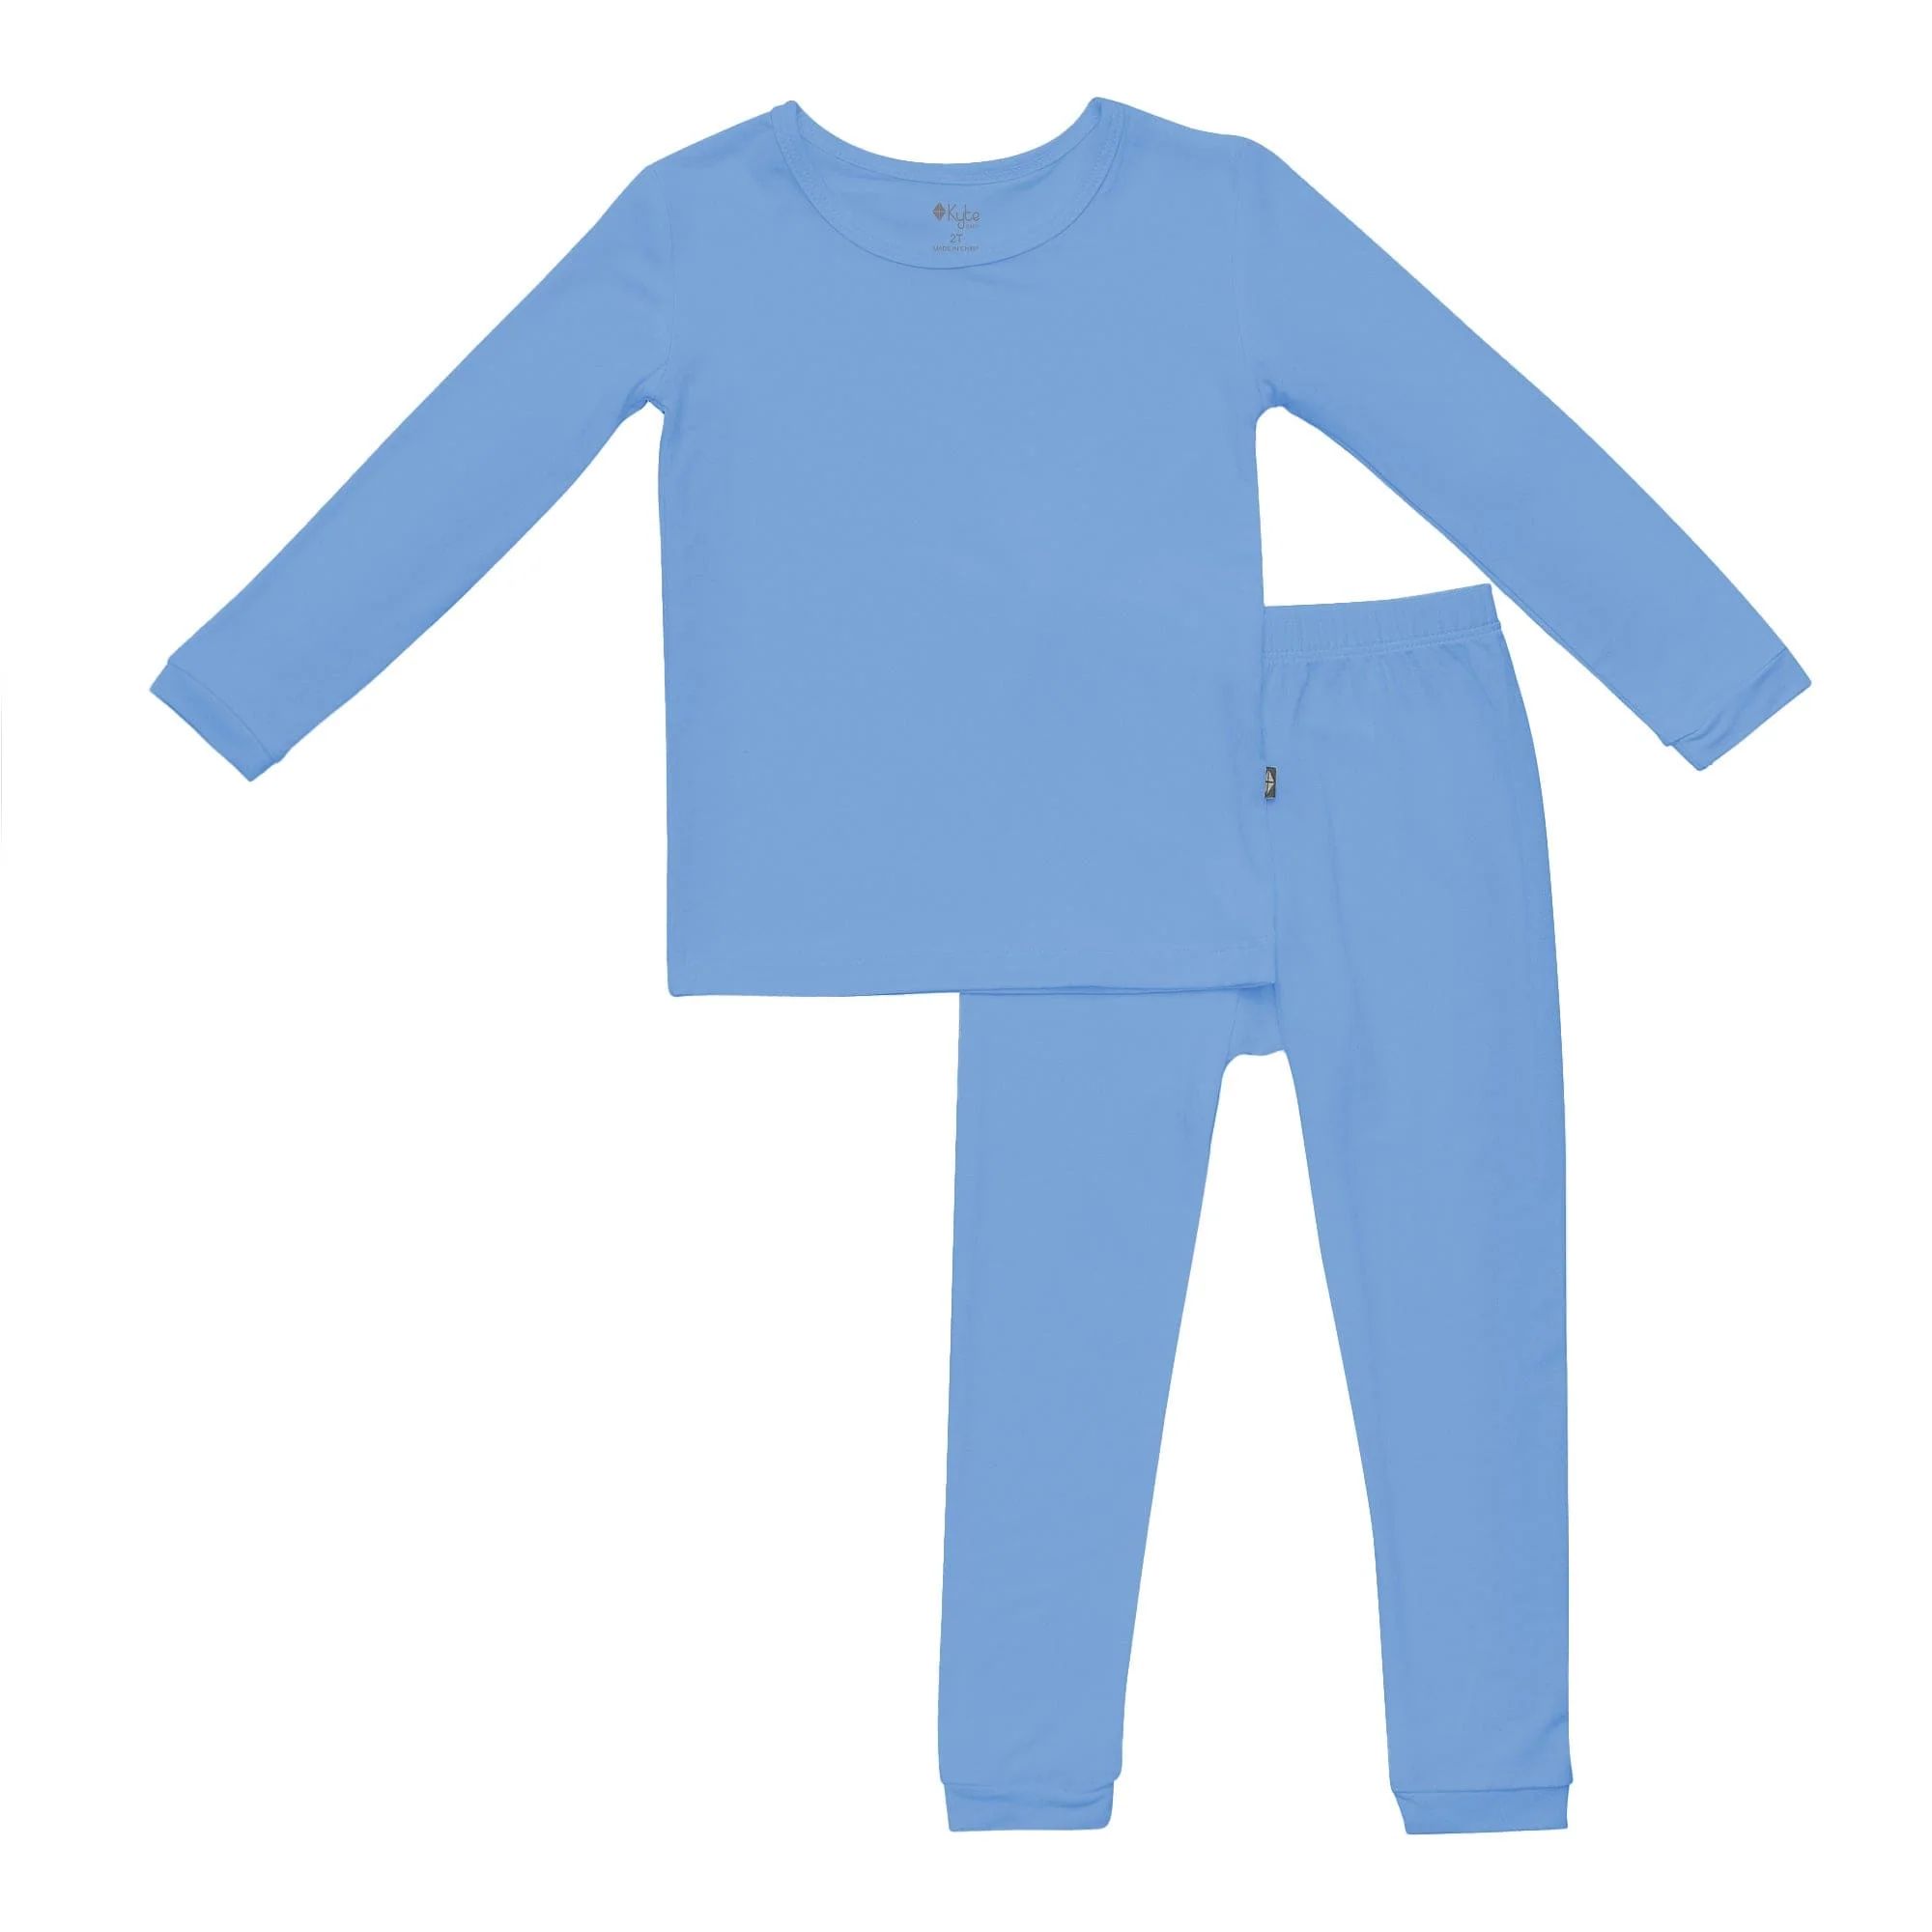 Toddler Pajama Set in Periwinkle | Kyte BABY